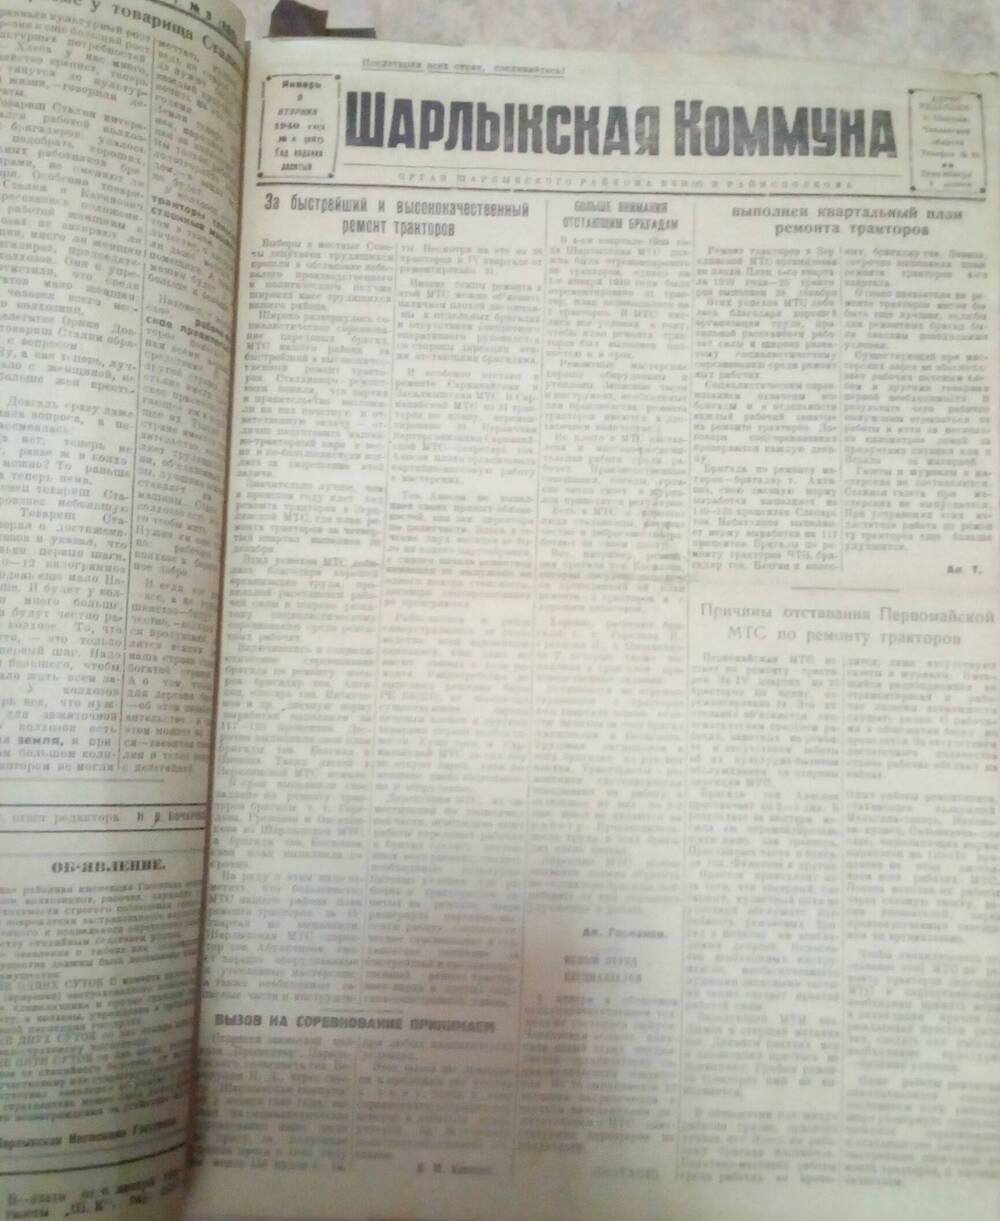 Подшивка газеты Шарлыкская коммуна за 1940 год.